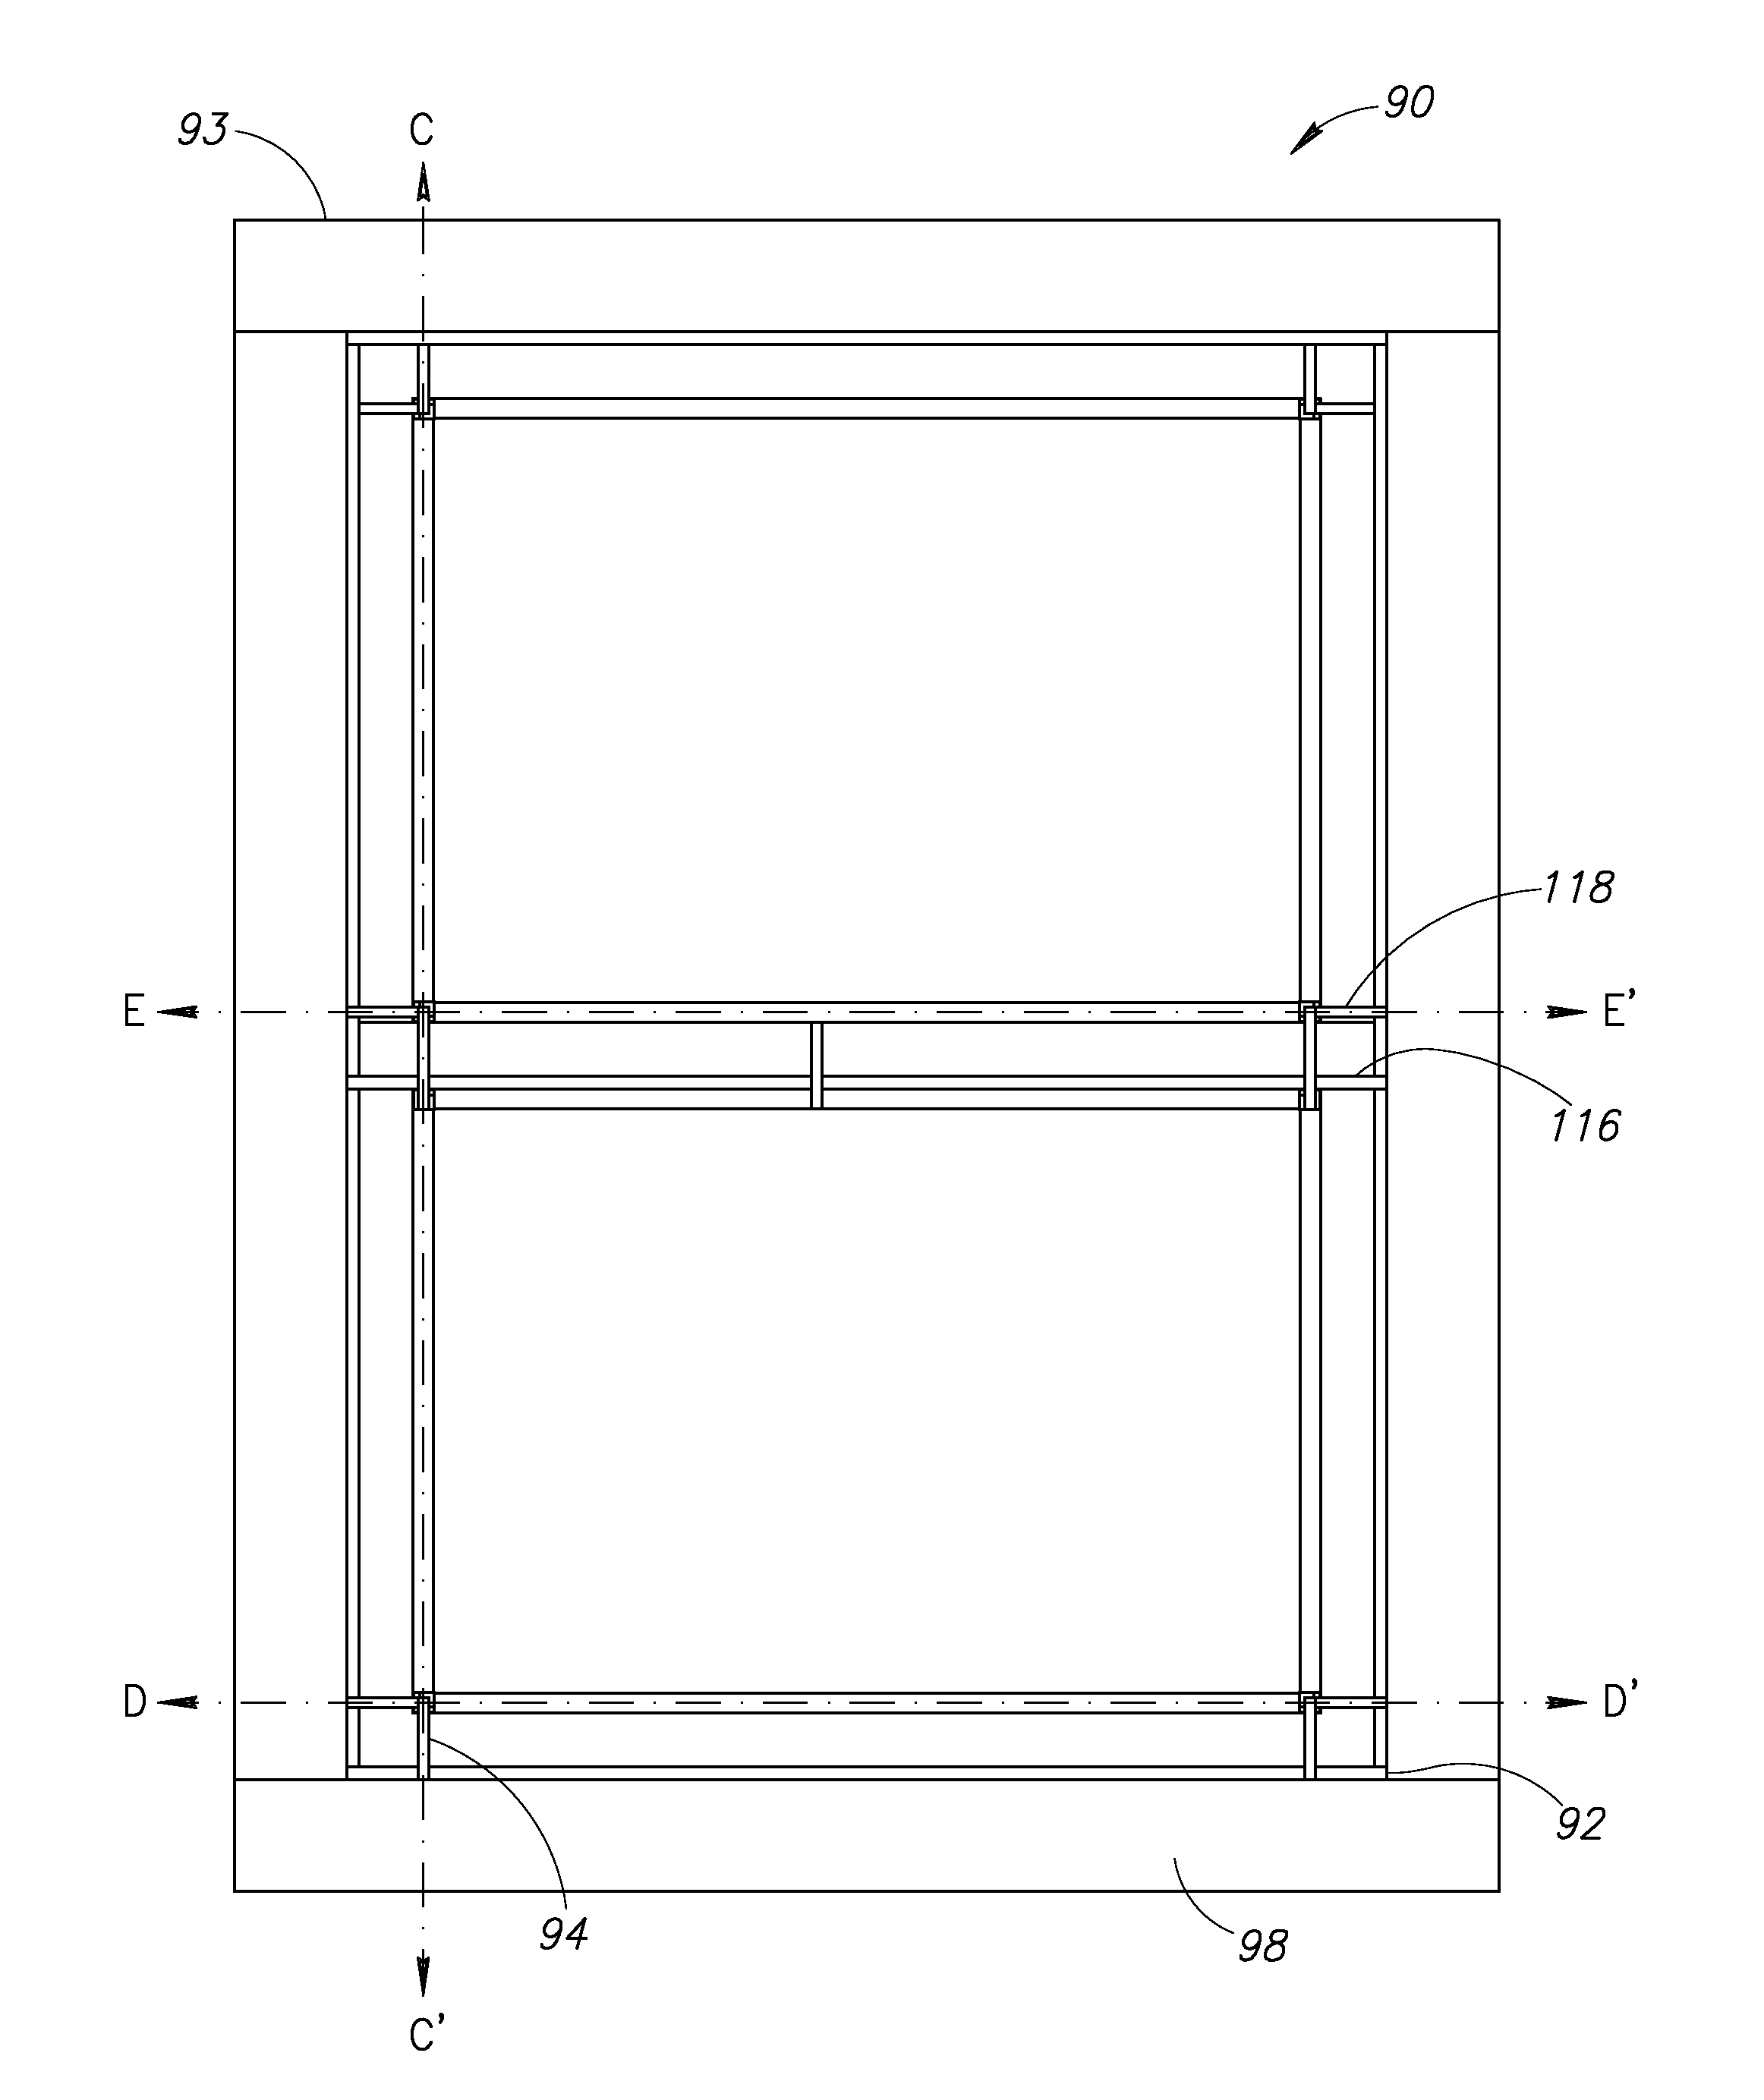 Supplemental window for fenestration